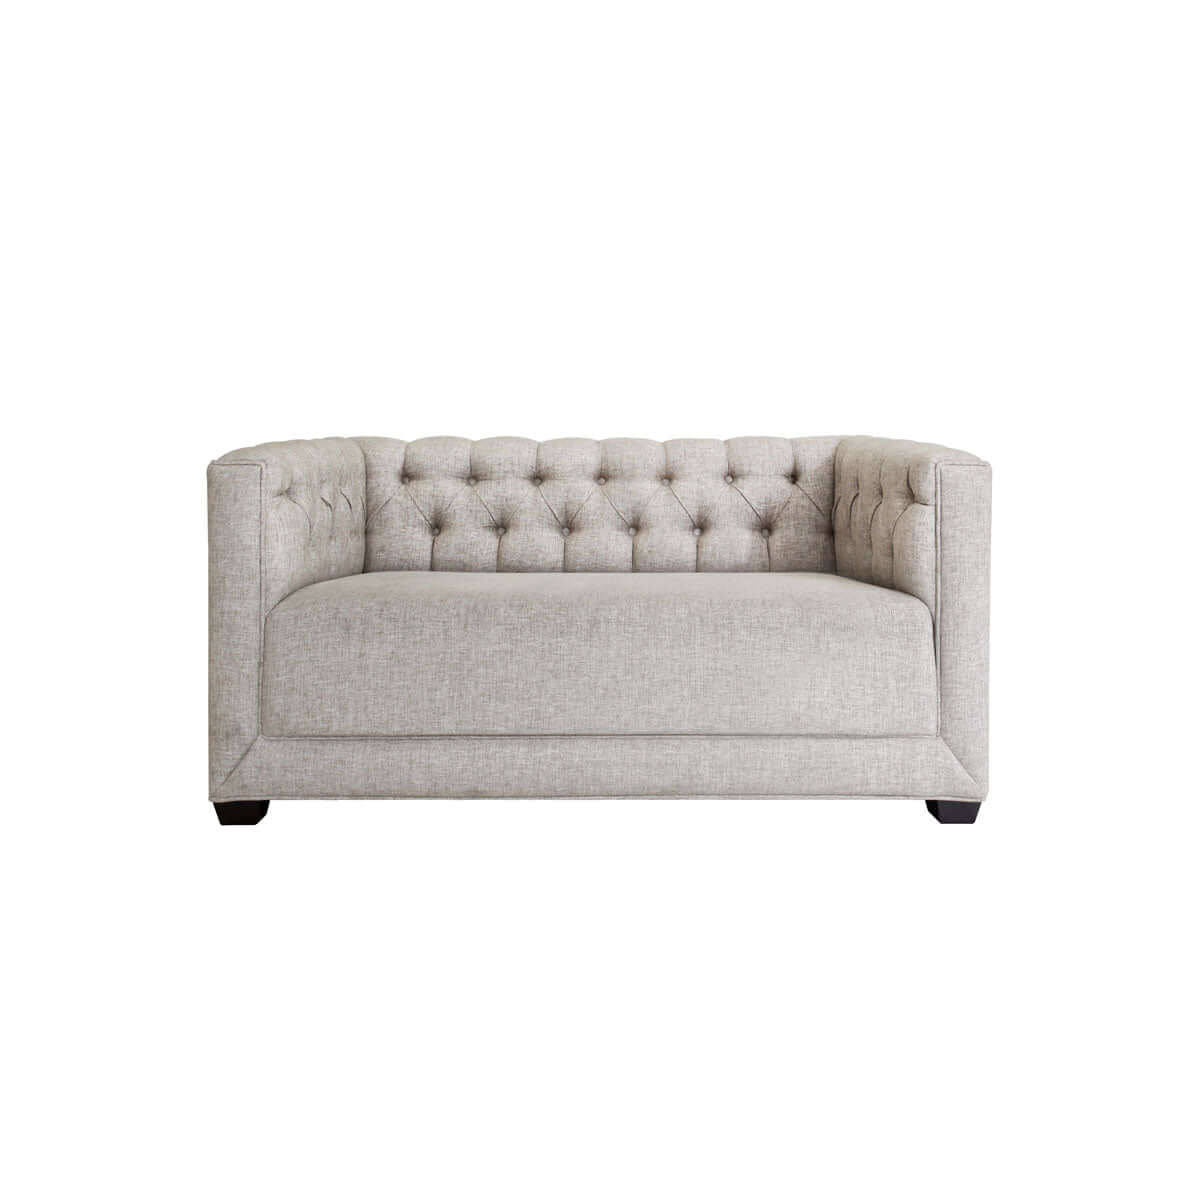 Hampton 2 seat tufted, classic and stylish sofa